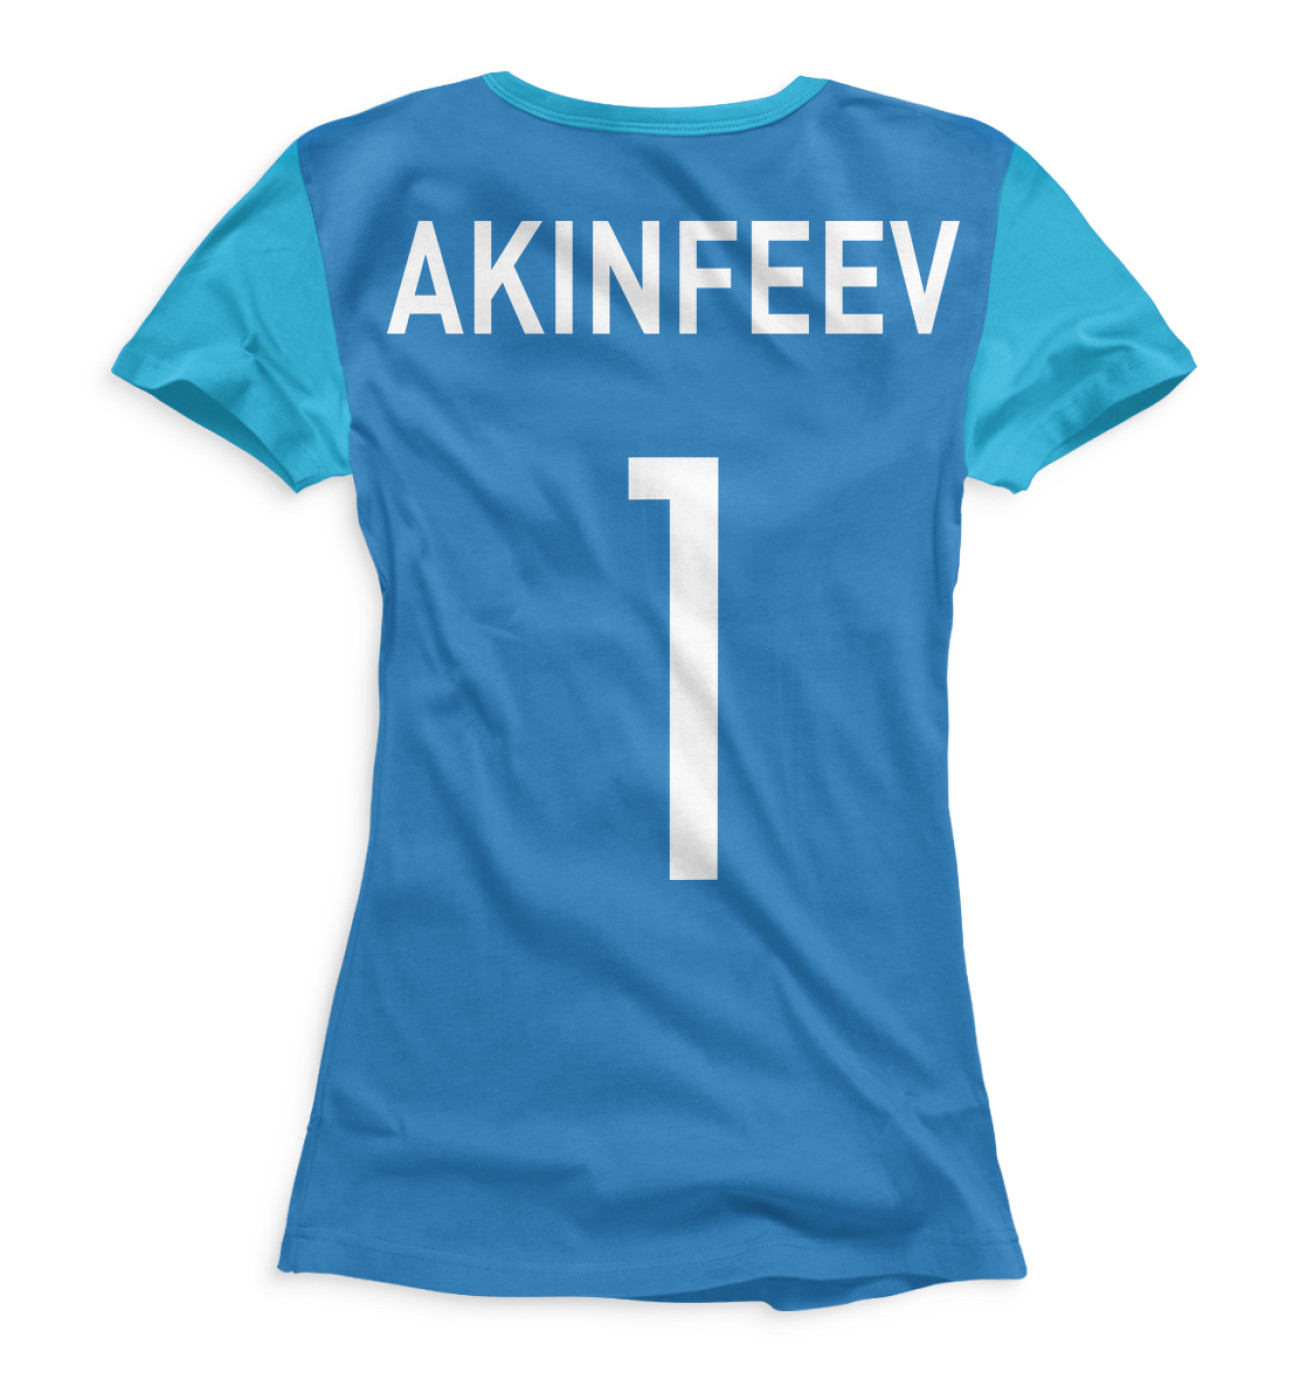 Женская Футболка Акинфеев, артикул: FLT-384908-fut-1